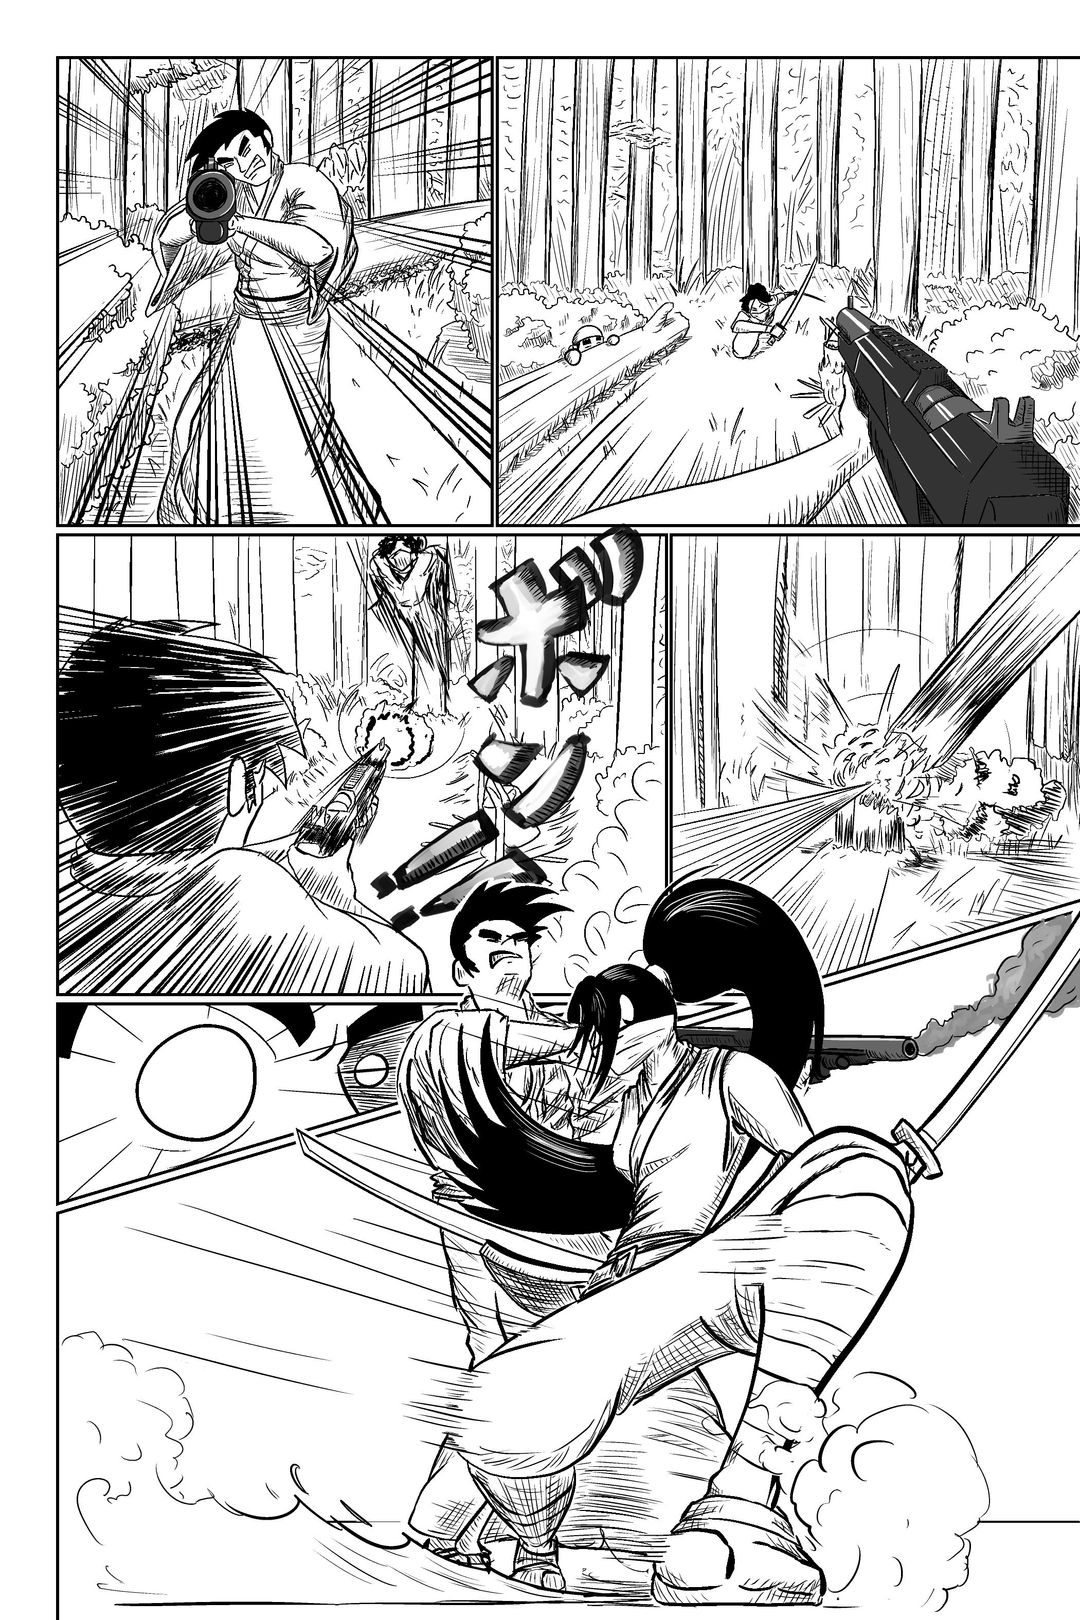 Shotgun Samurai 04 panel 1